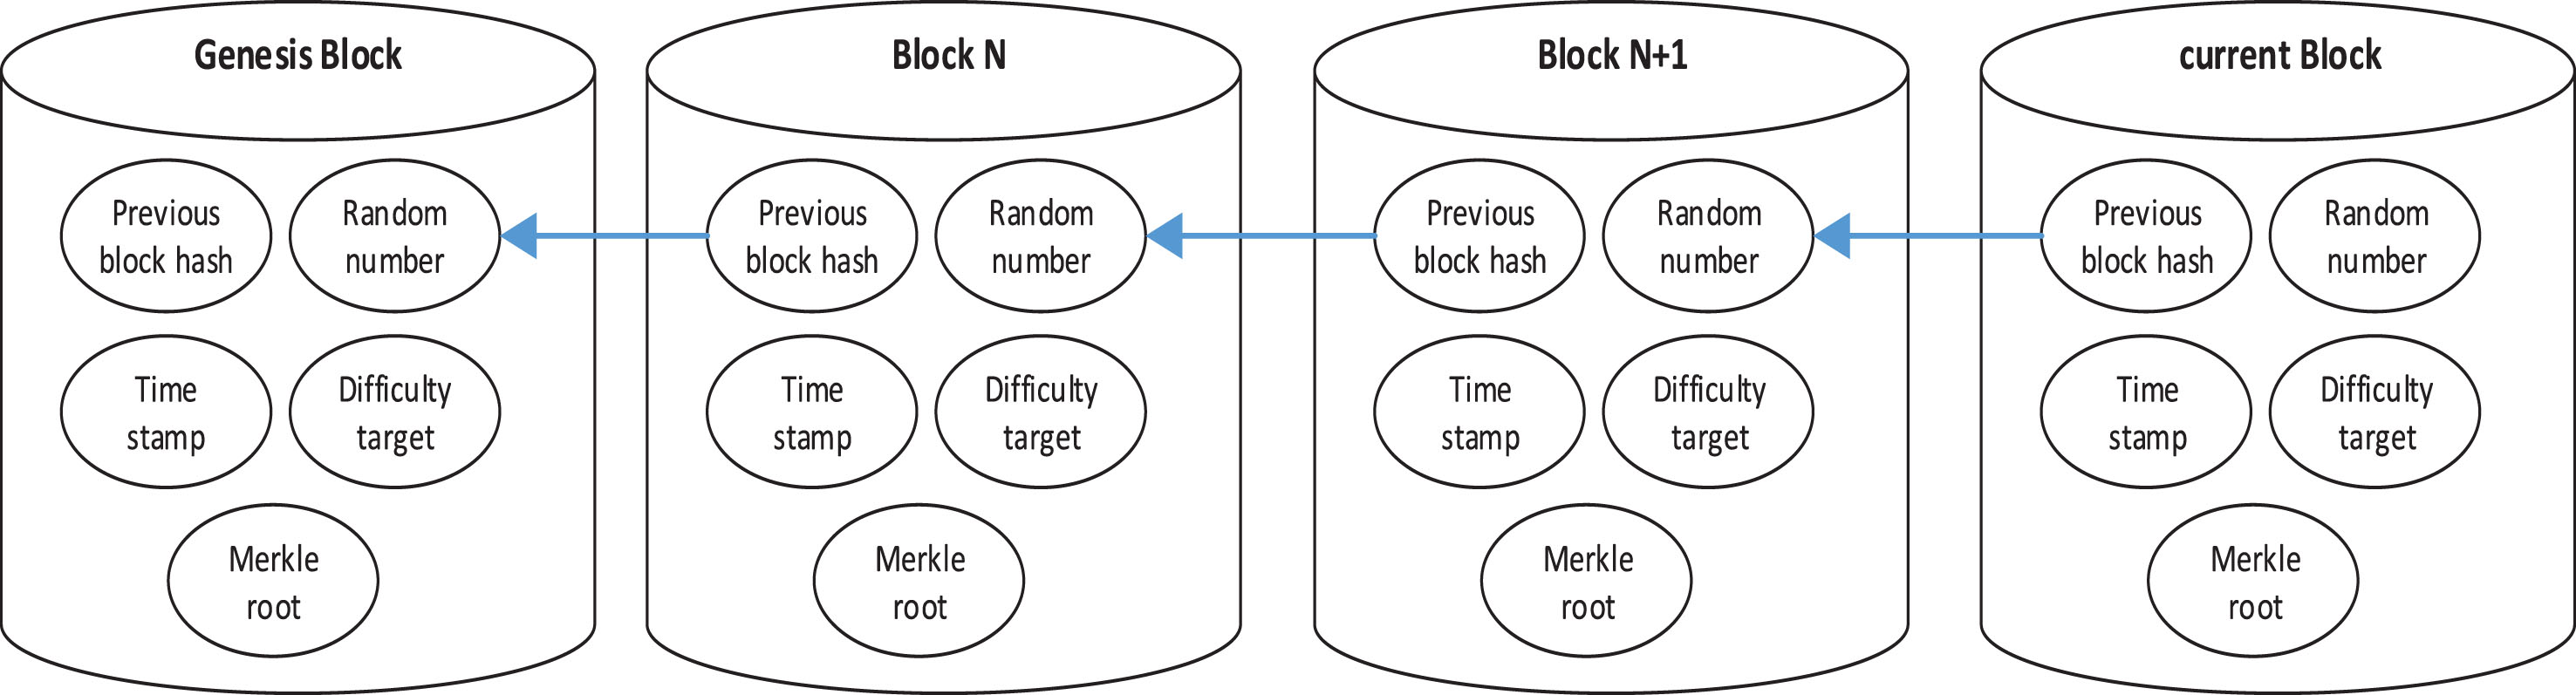 uBlock Origin Developers Take Steps to Block Cryptocurrency Mining Scripts  » The Merkle News